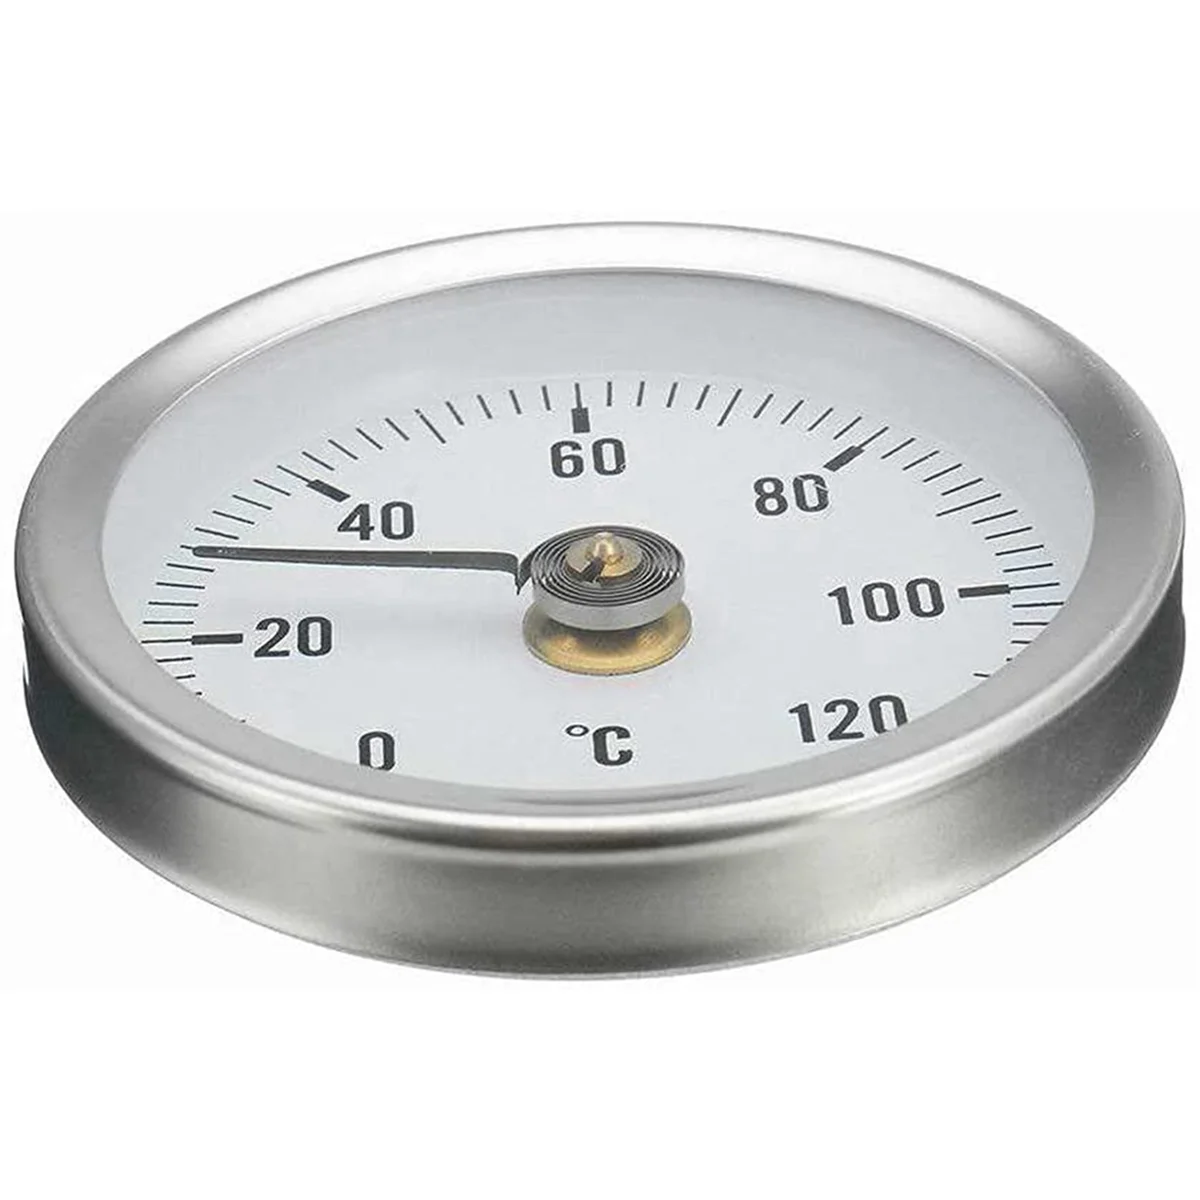 Термометр 63 мм. Термометр 63мм 120cl-55. Sitem термометр горизонтальный d63 mm, 0-120с, 50 mm. Термометр 0-120 с. Температурный датчик круглый.